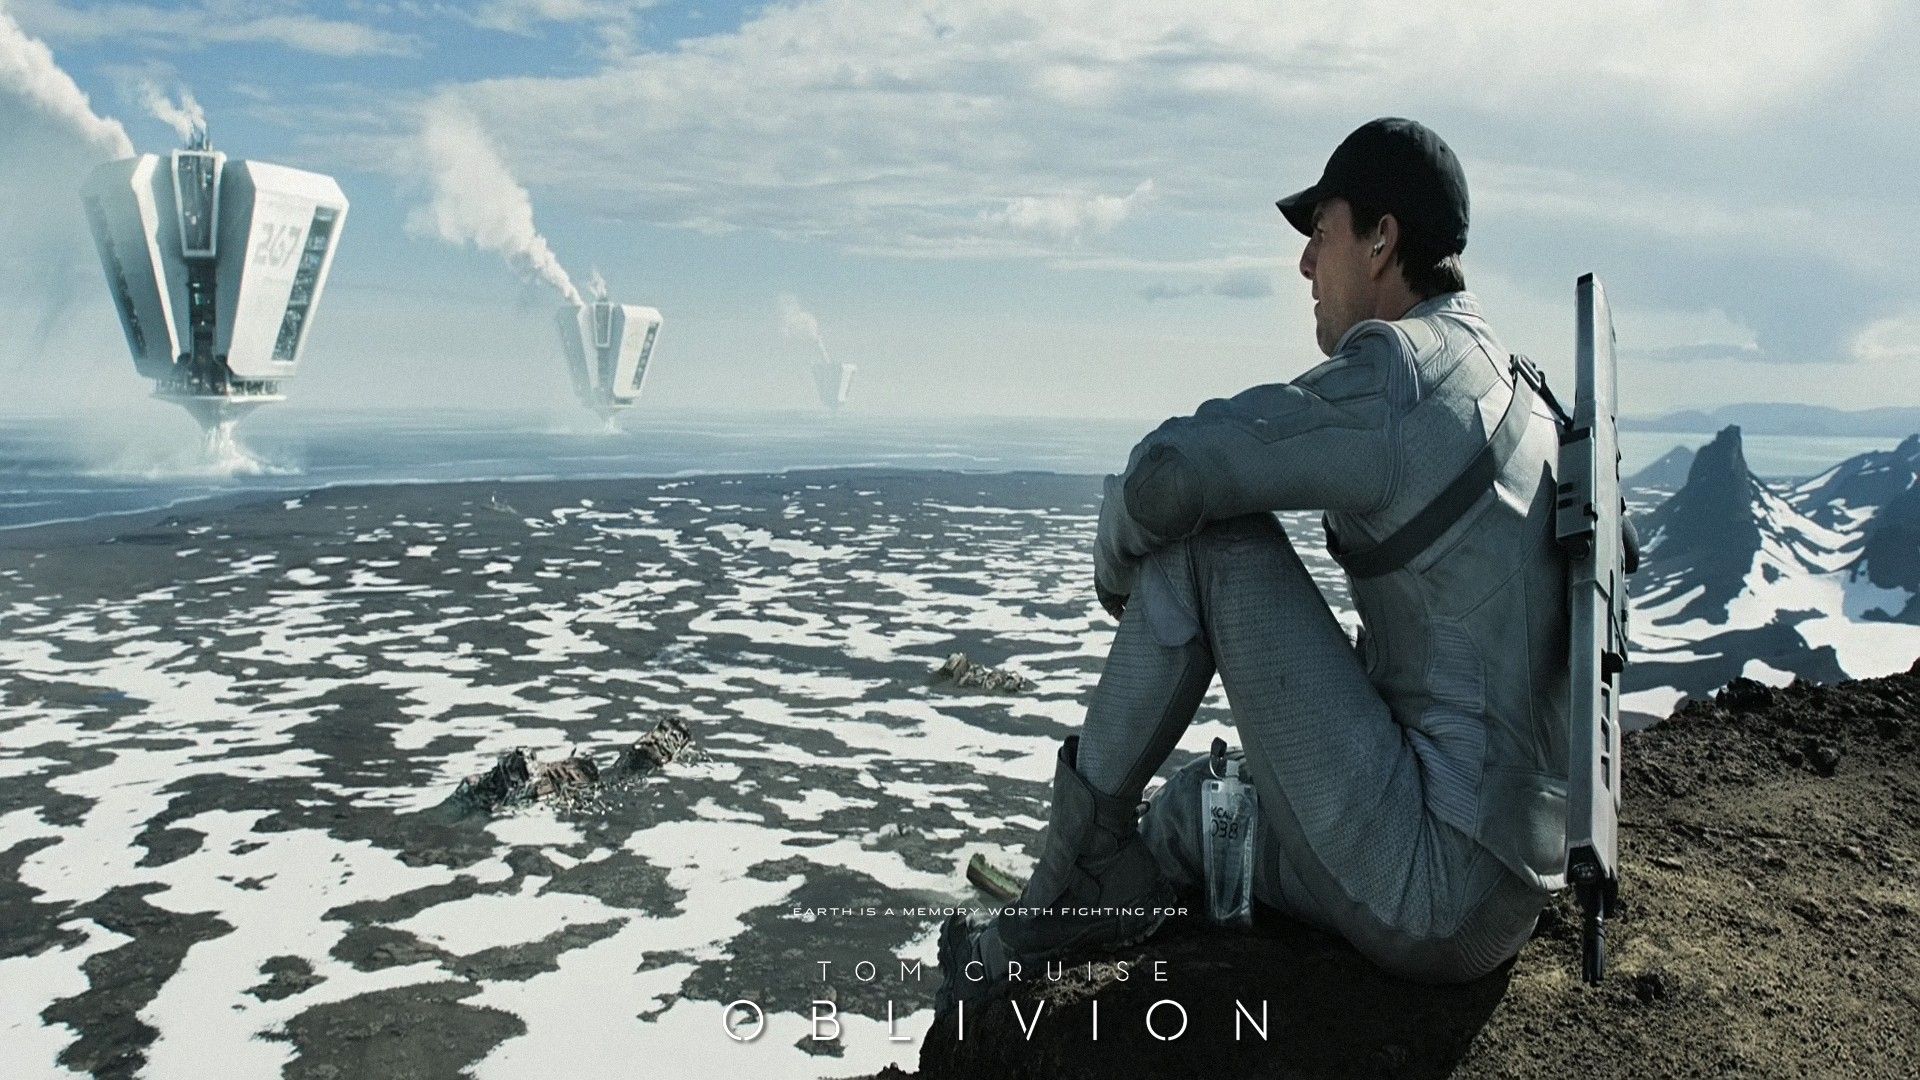 Oblivion movie wallpaper in HD - Tom Cruise science fiction film